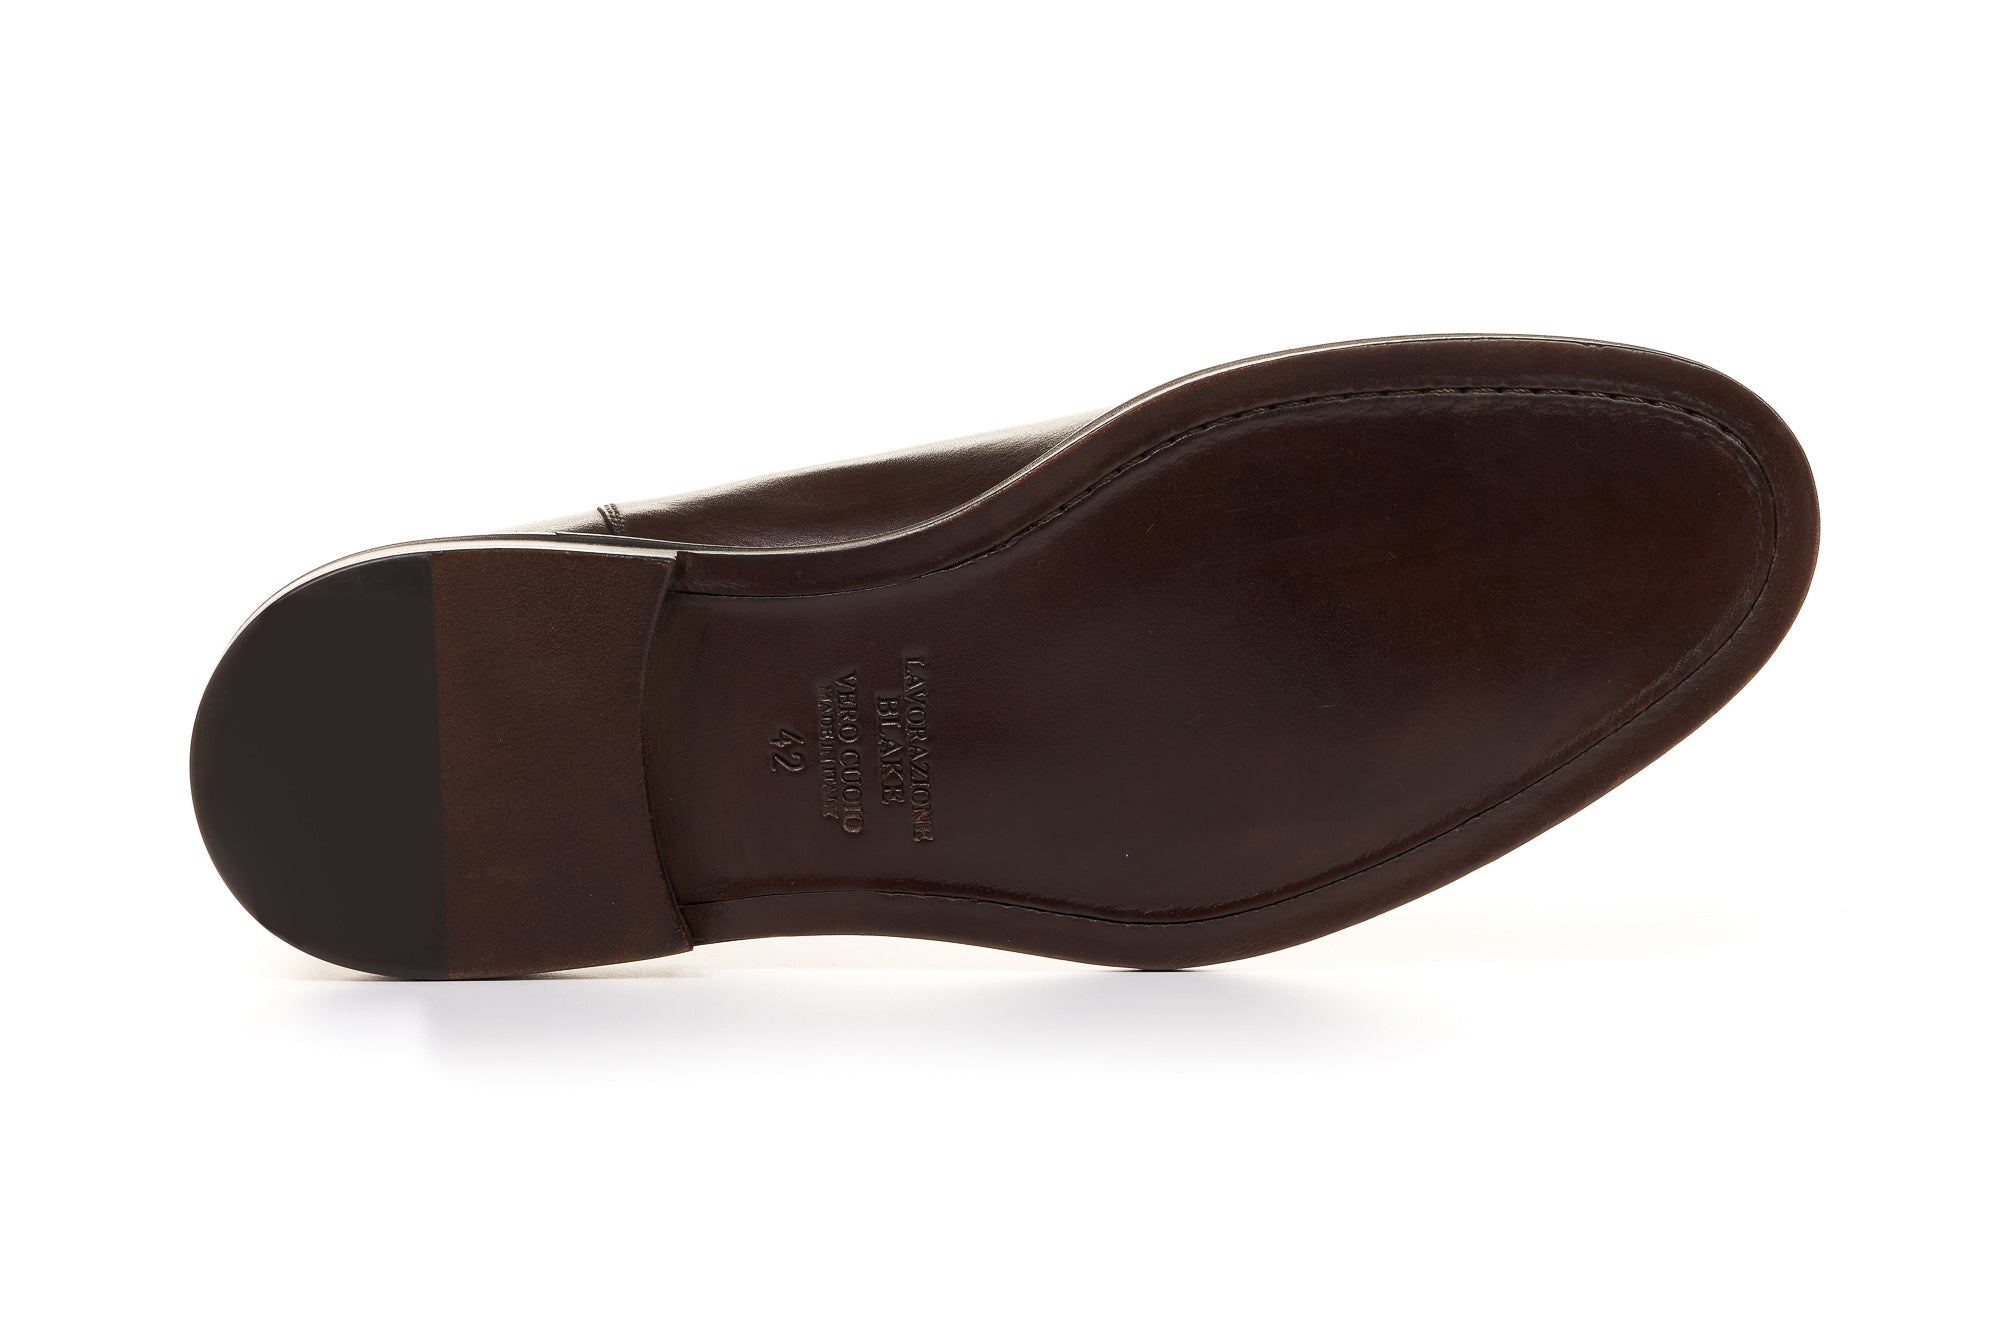 The Gian Carlo Chelsea Boot - Dark Brown Chocolate